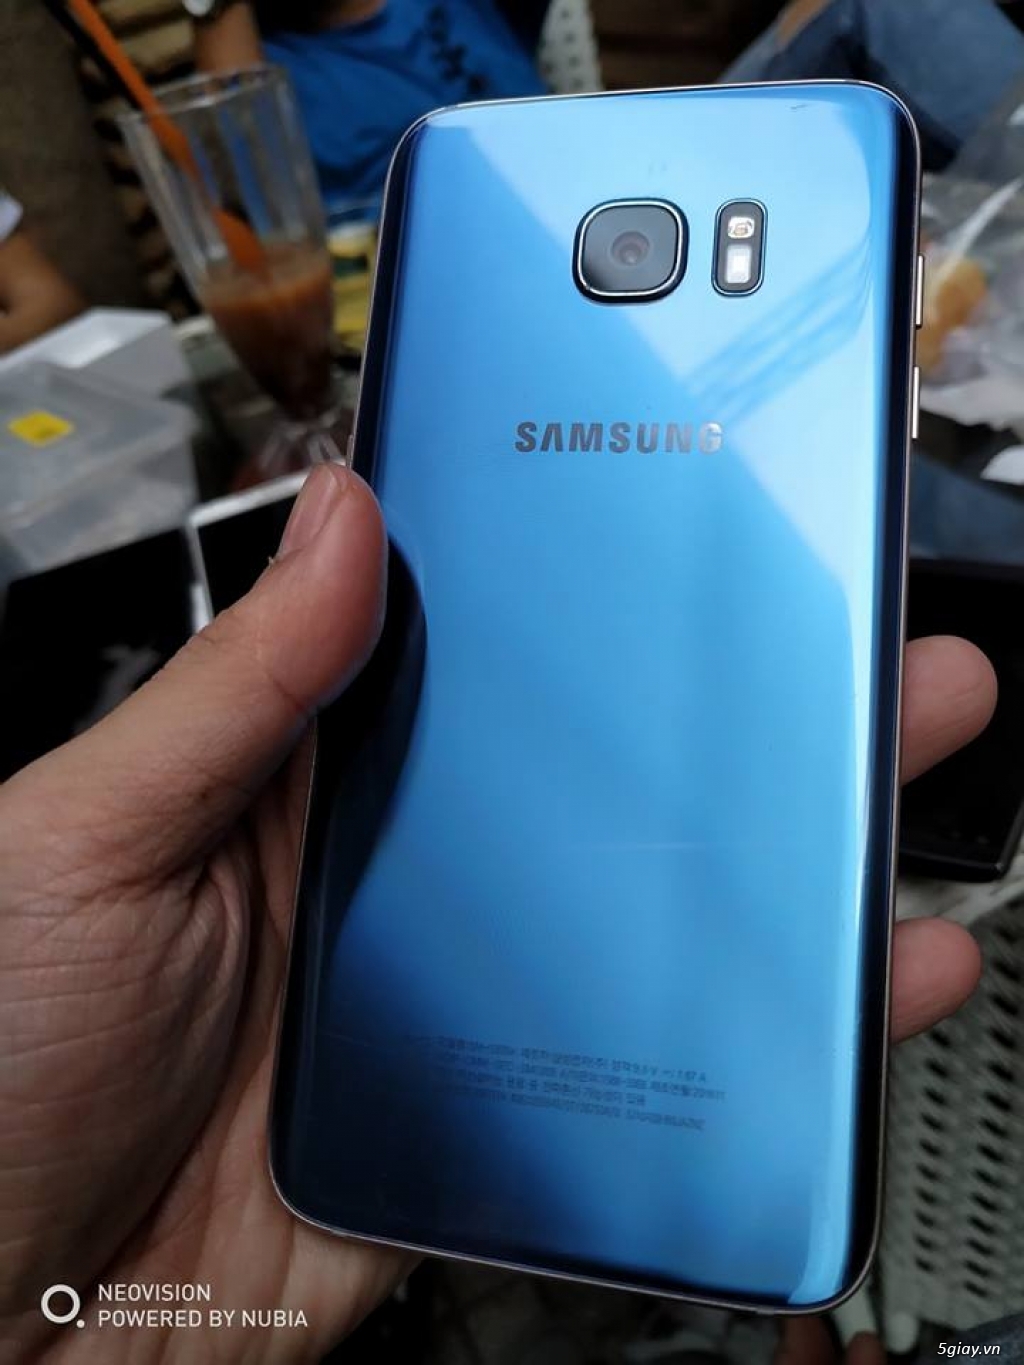 Samsung S7 Edge blue coral, Note 5, Asus zen 4 max pro, 4 max - 6